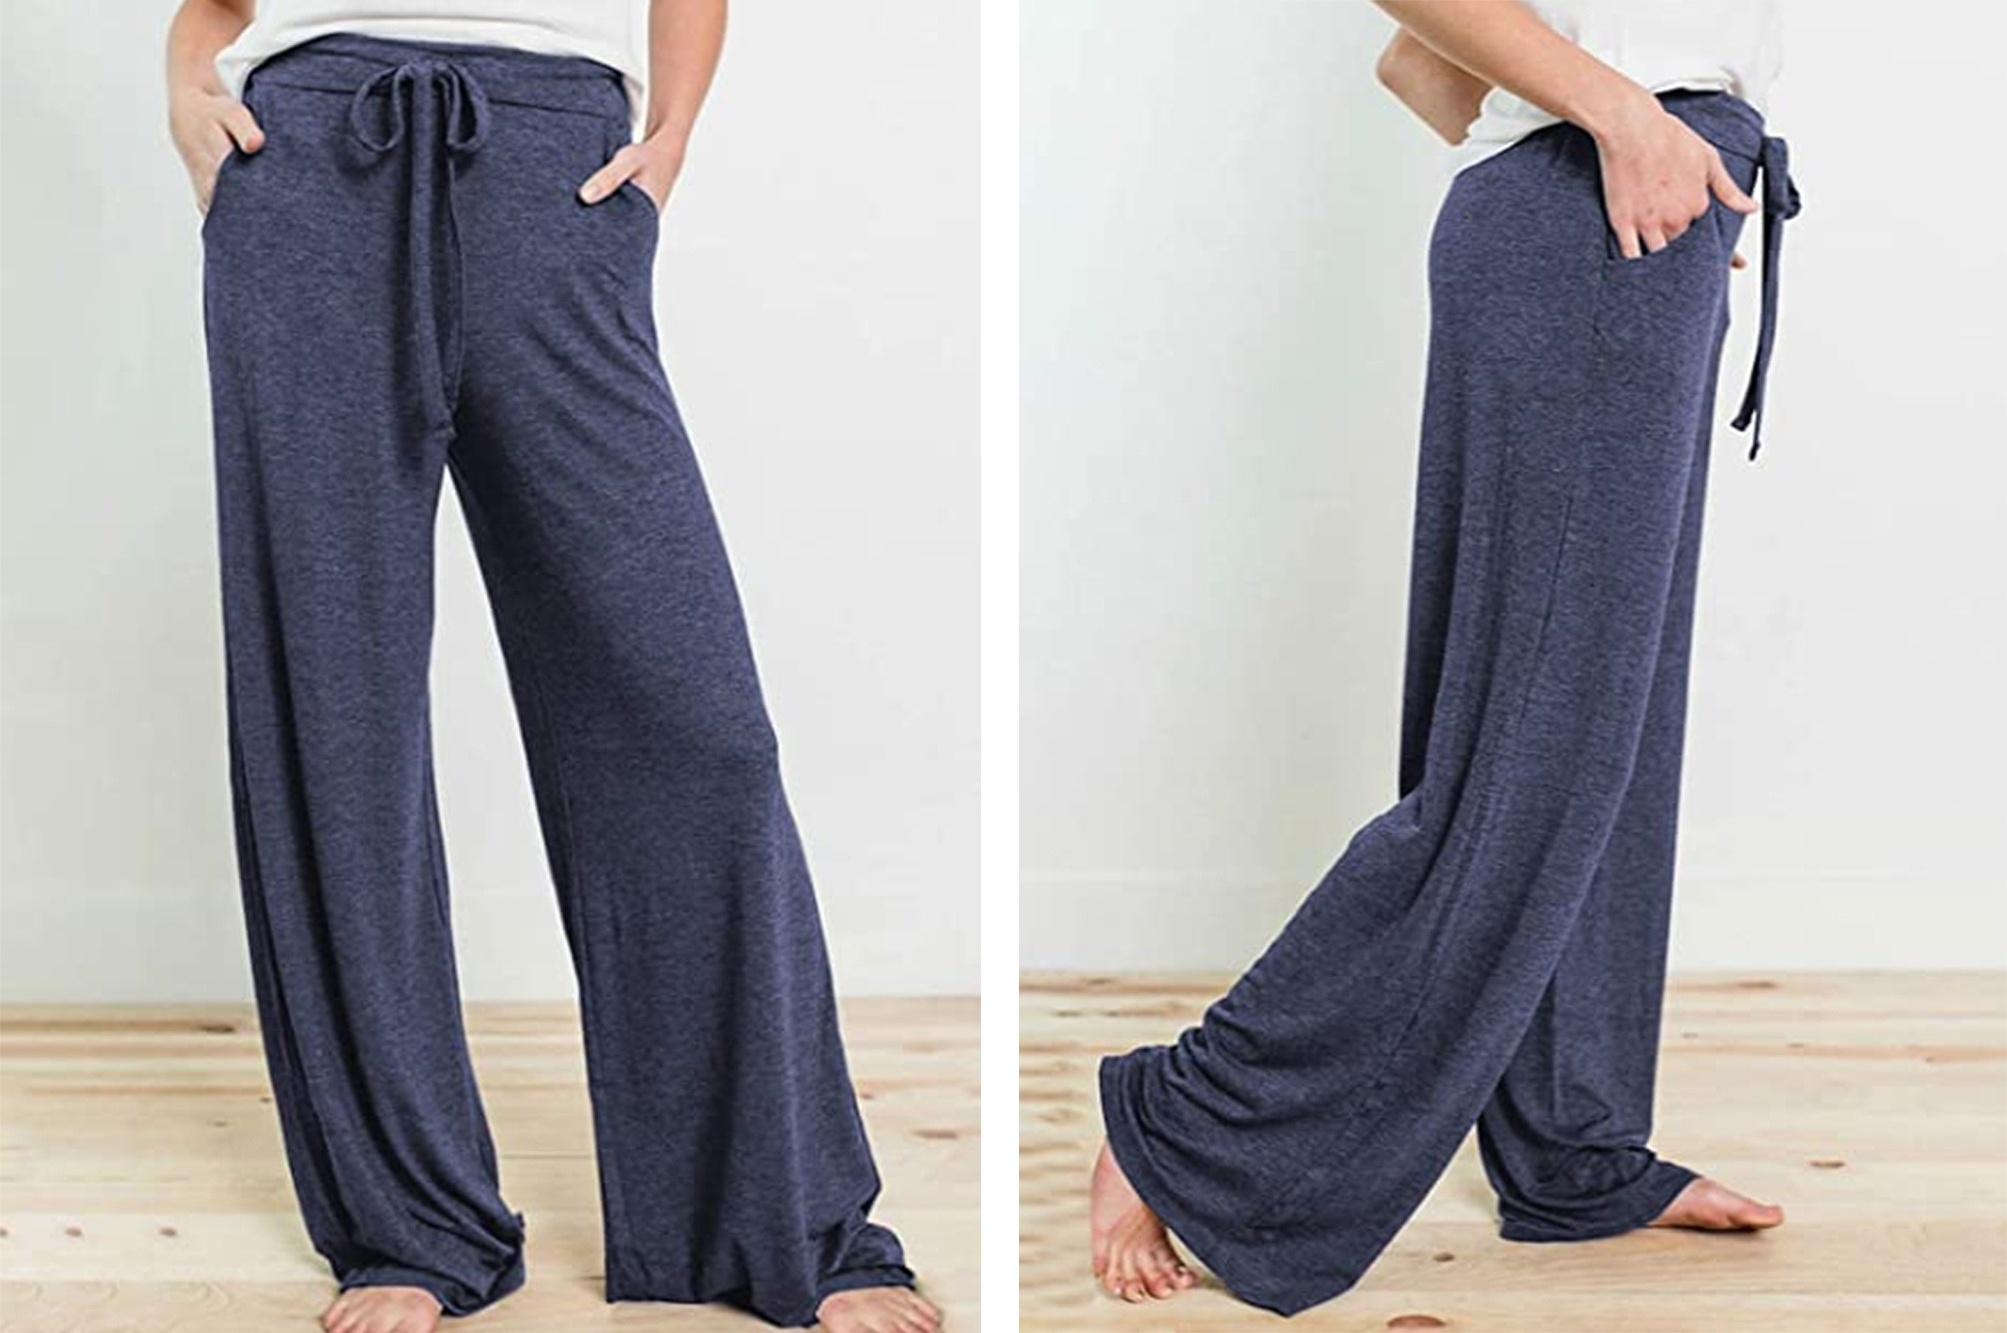 KINPLE Womens Comfy Lounge Pants Loose Yoga Pants Drawstring Soft Pajama  Pants with Pockets 